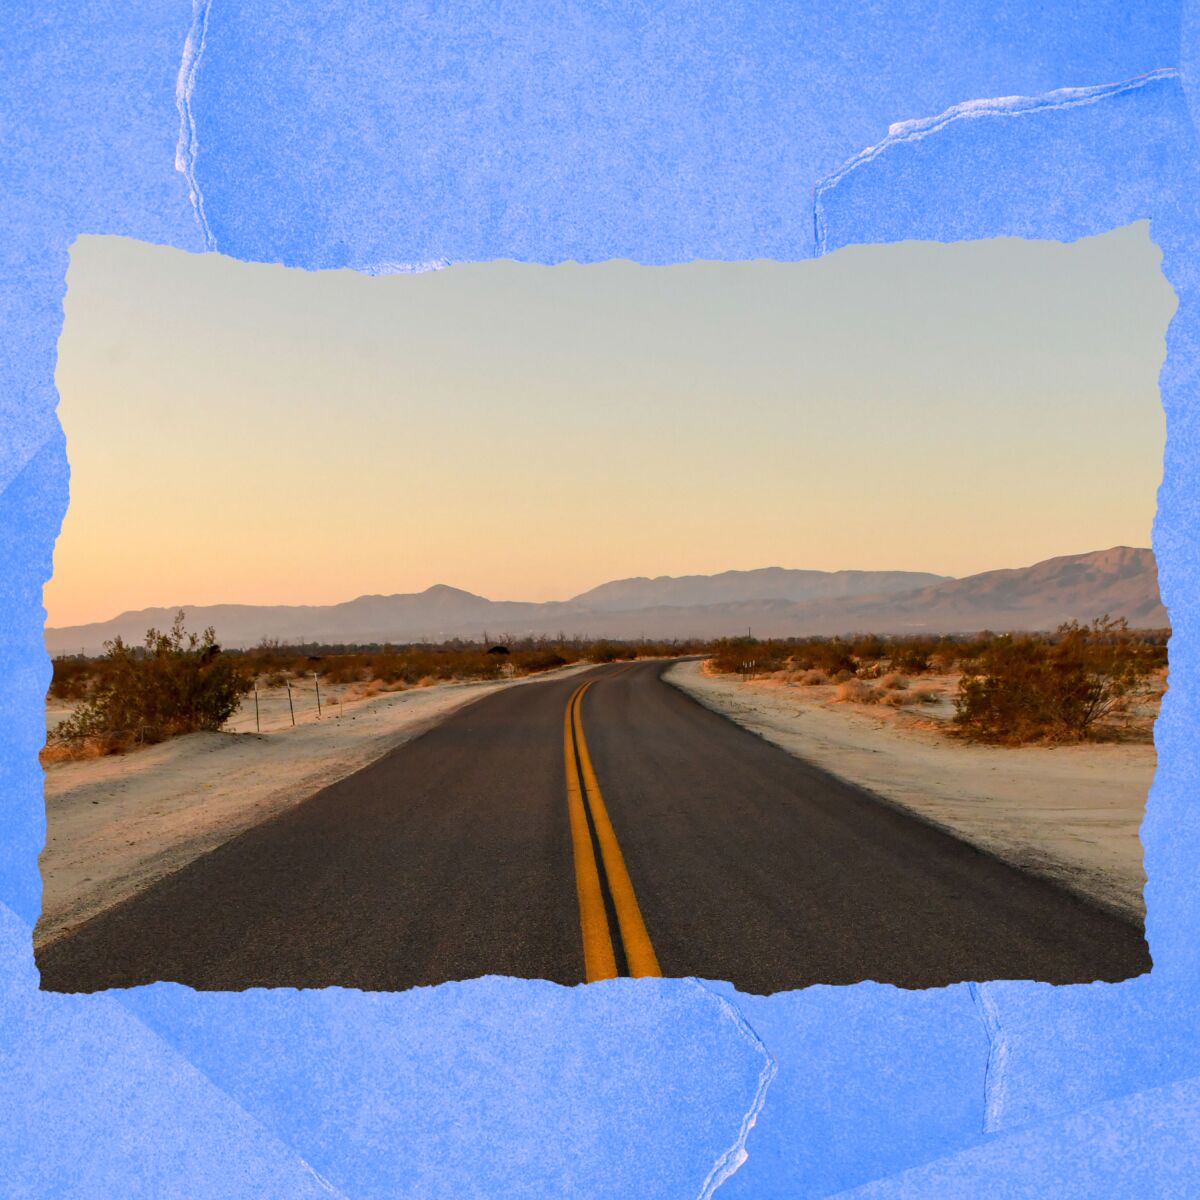 A paved road runs through the desert and toward hills.